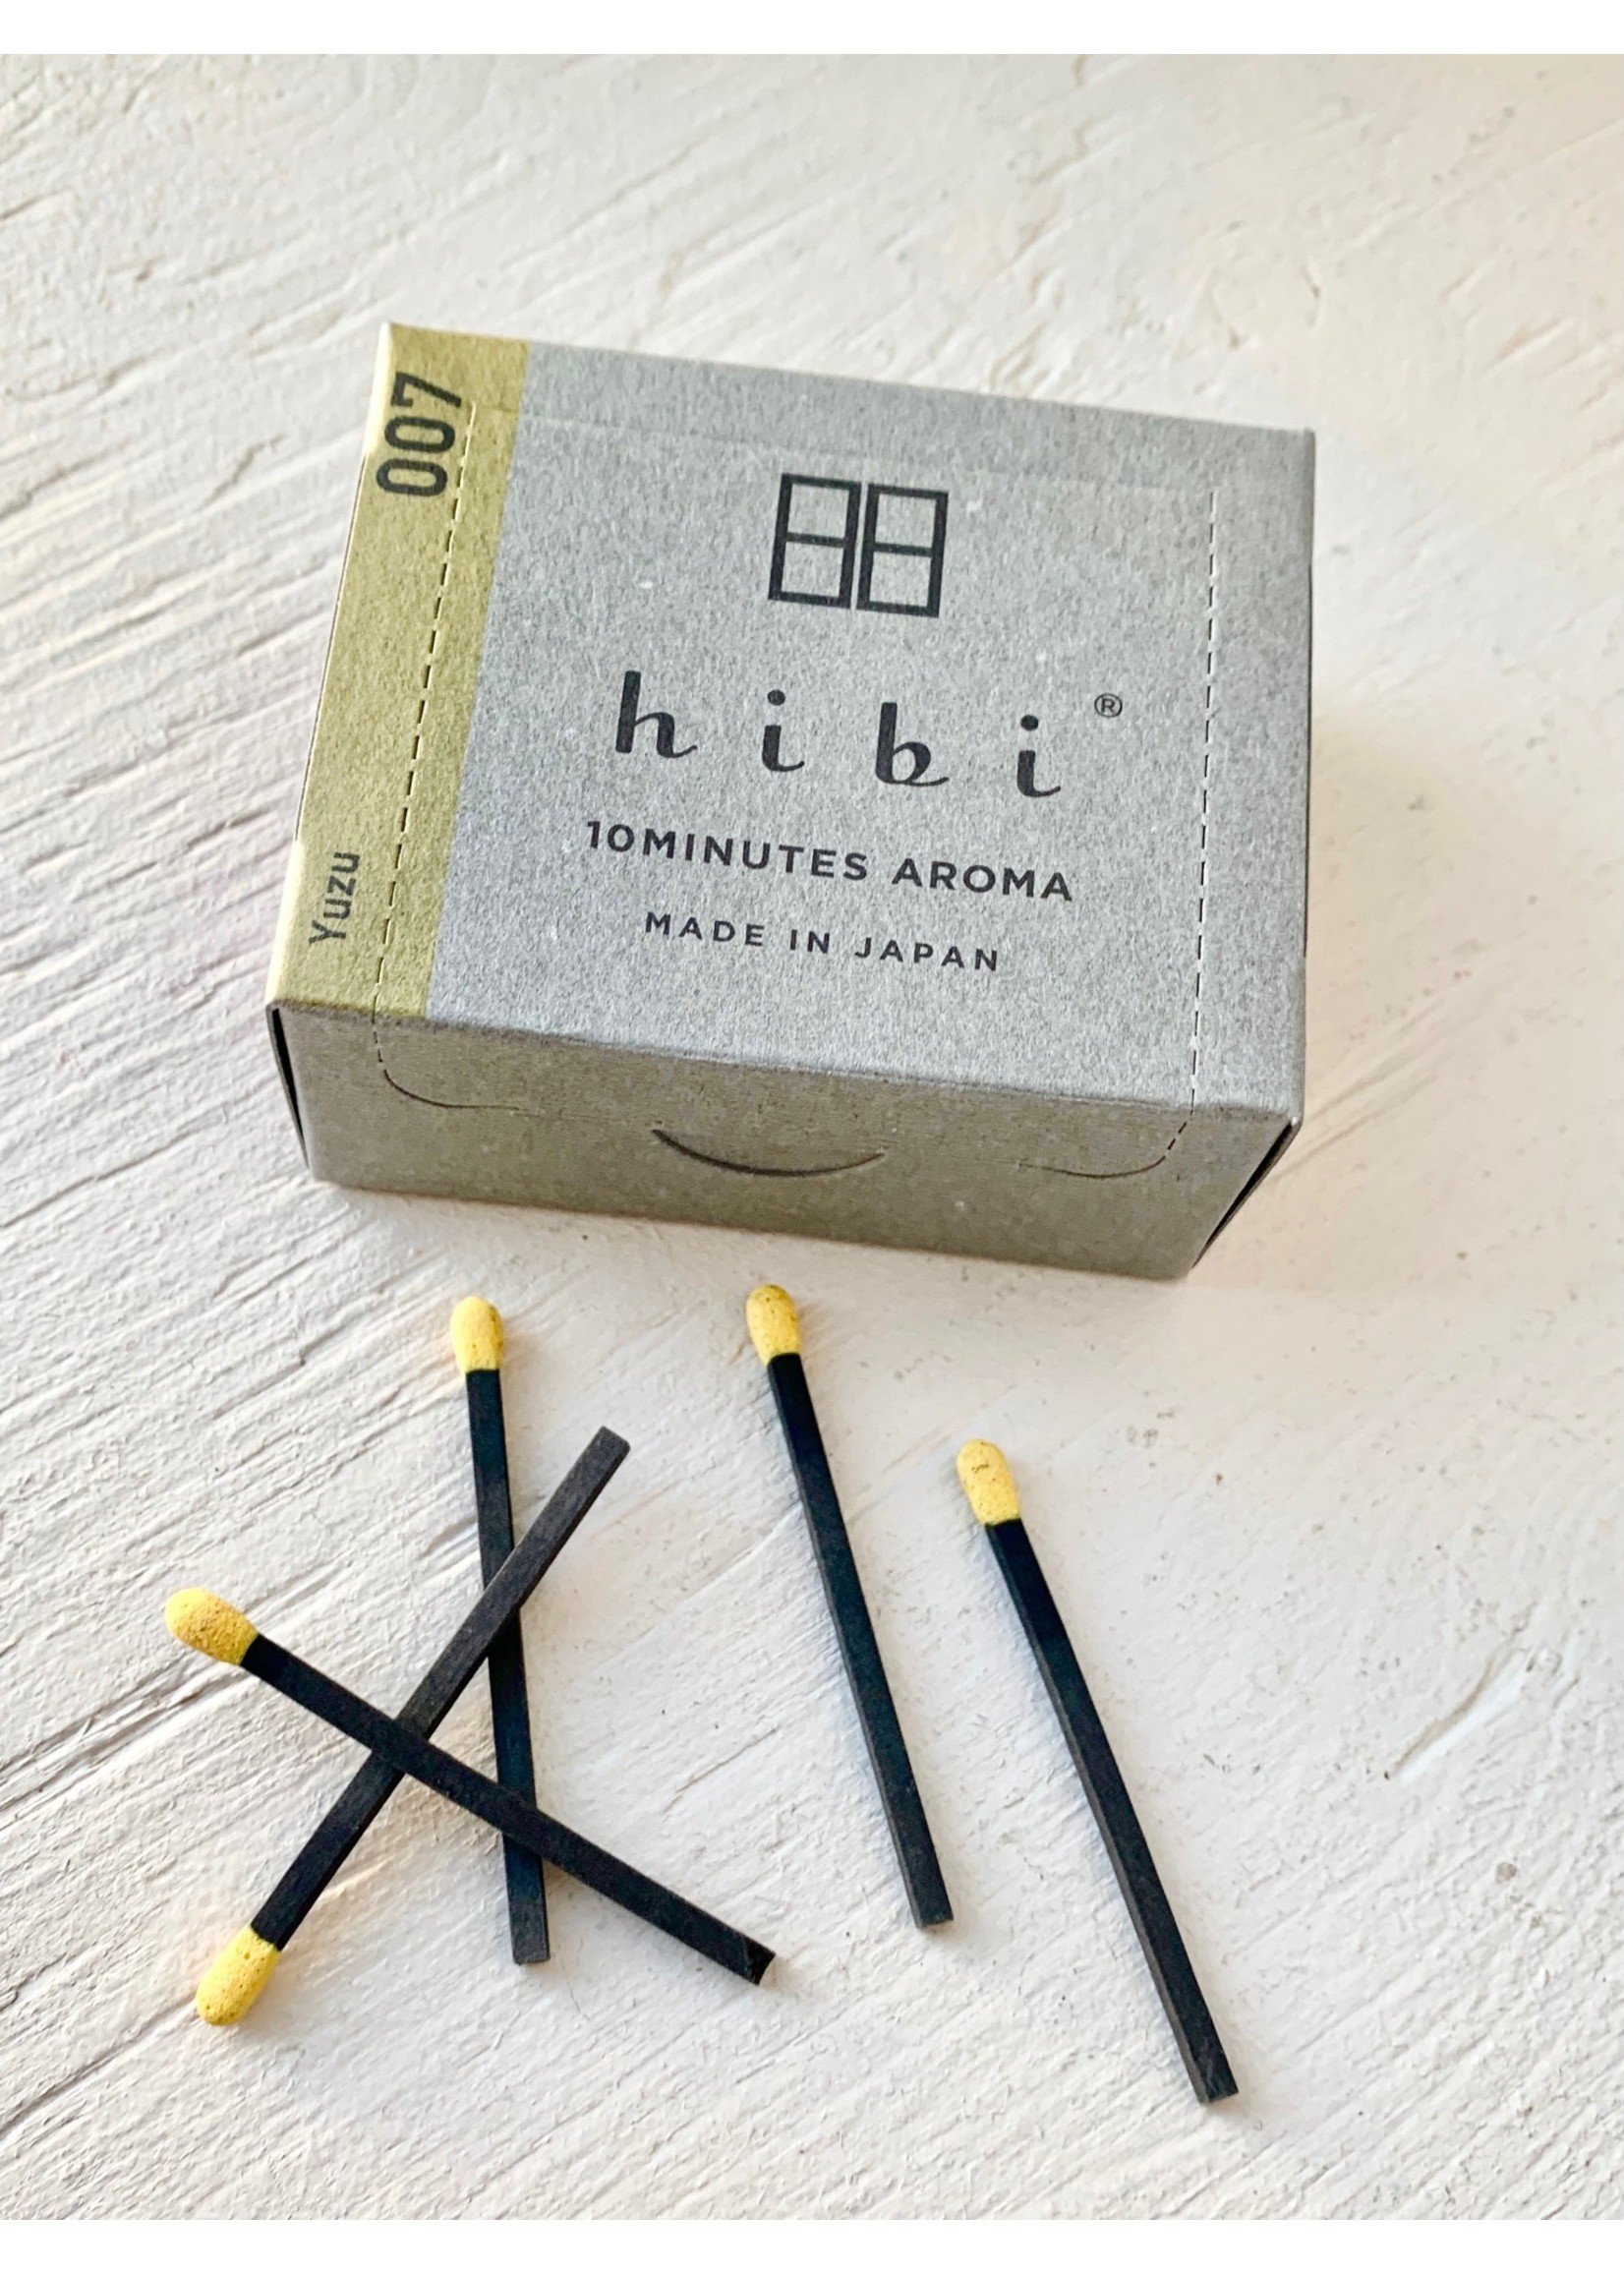 Hibi Large Box Incense Matches by Hibi